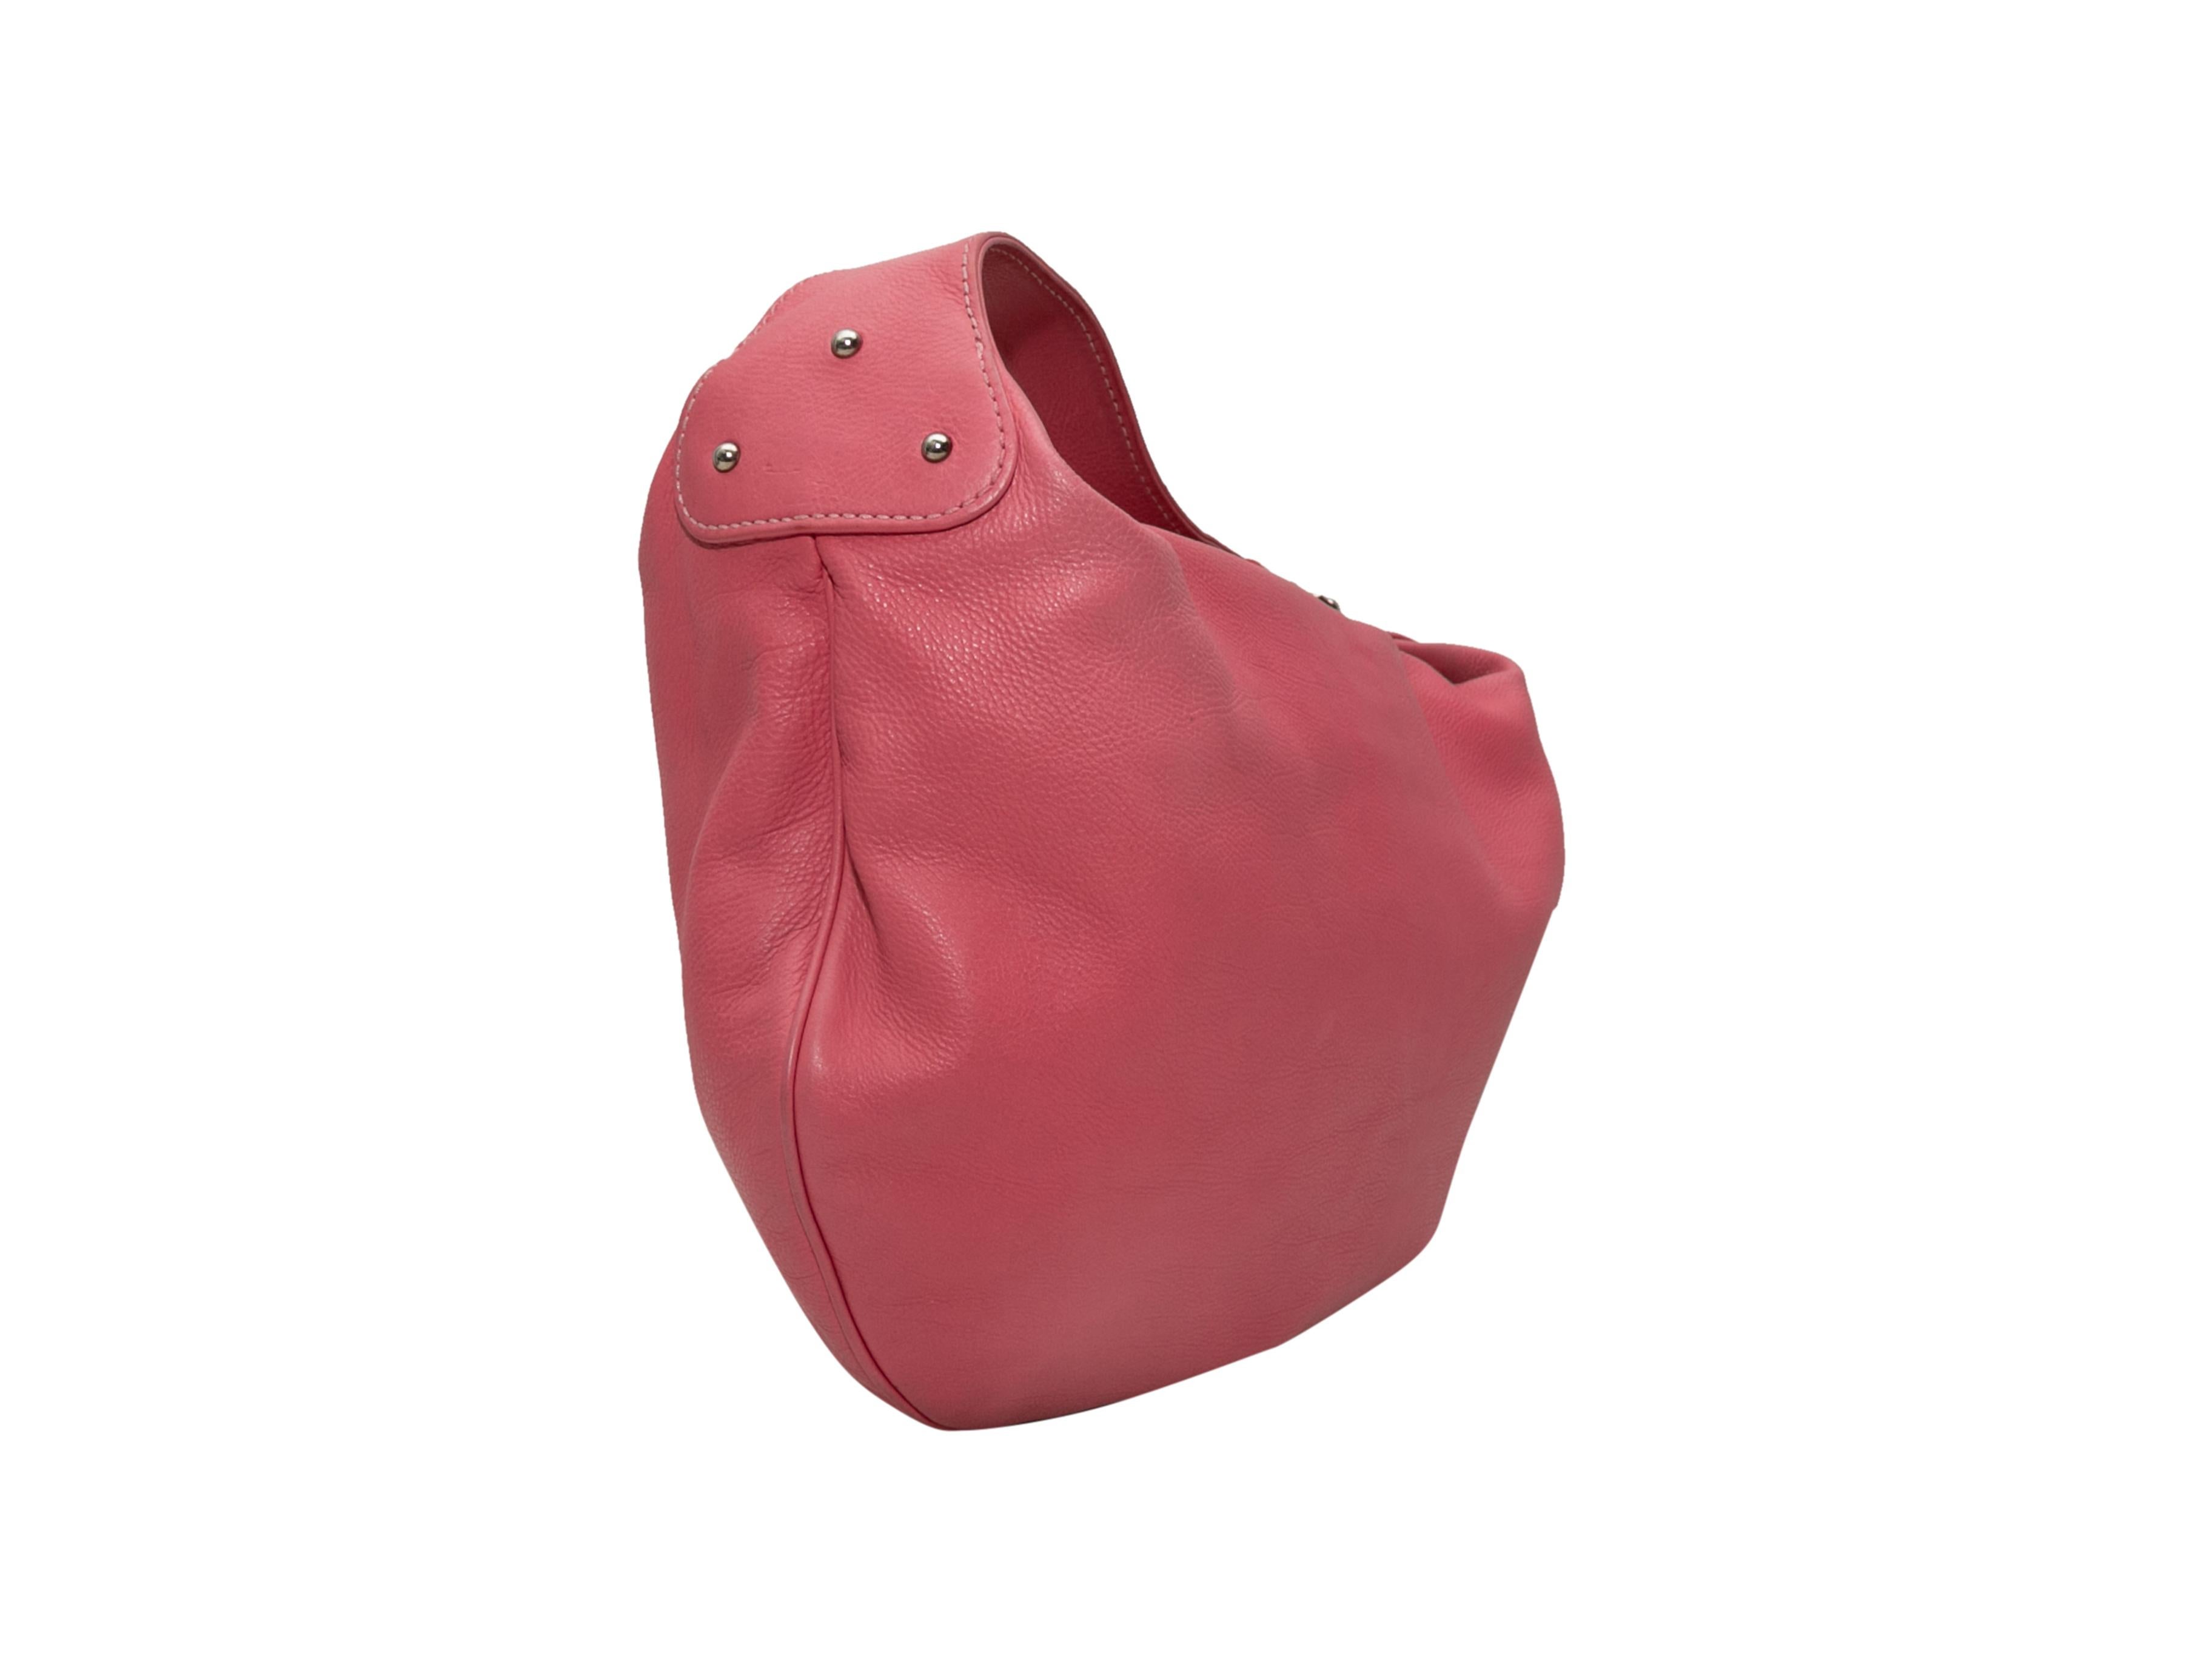 marc jacobs bag pink